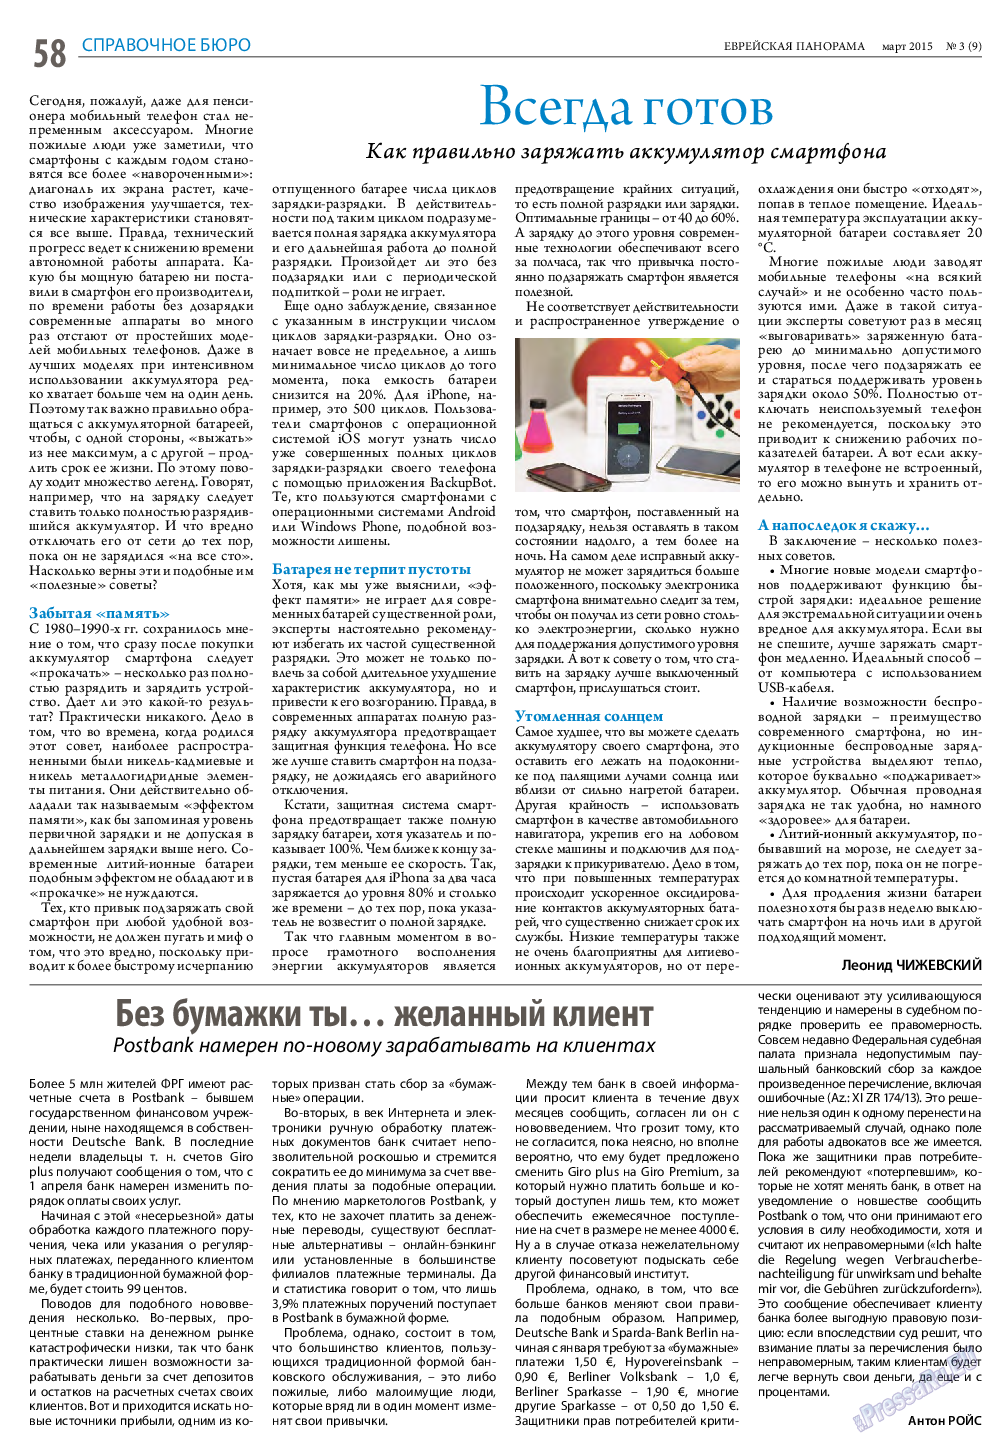 Еврейская панорама, газета. 2015 №3 стр.58